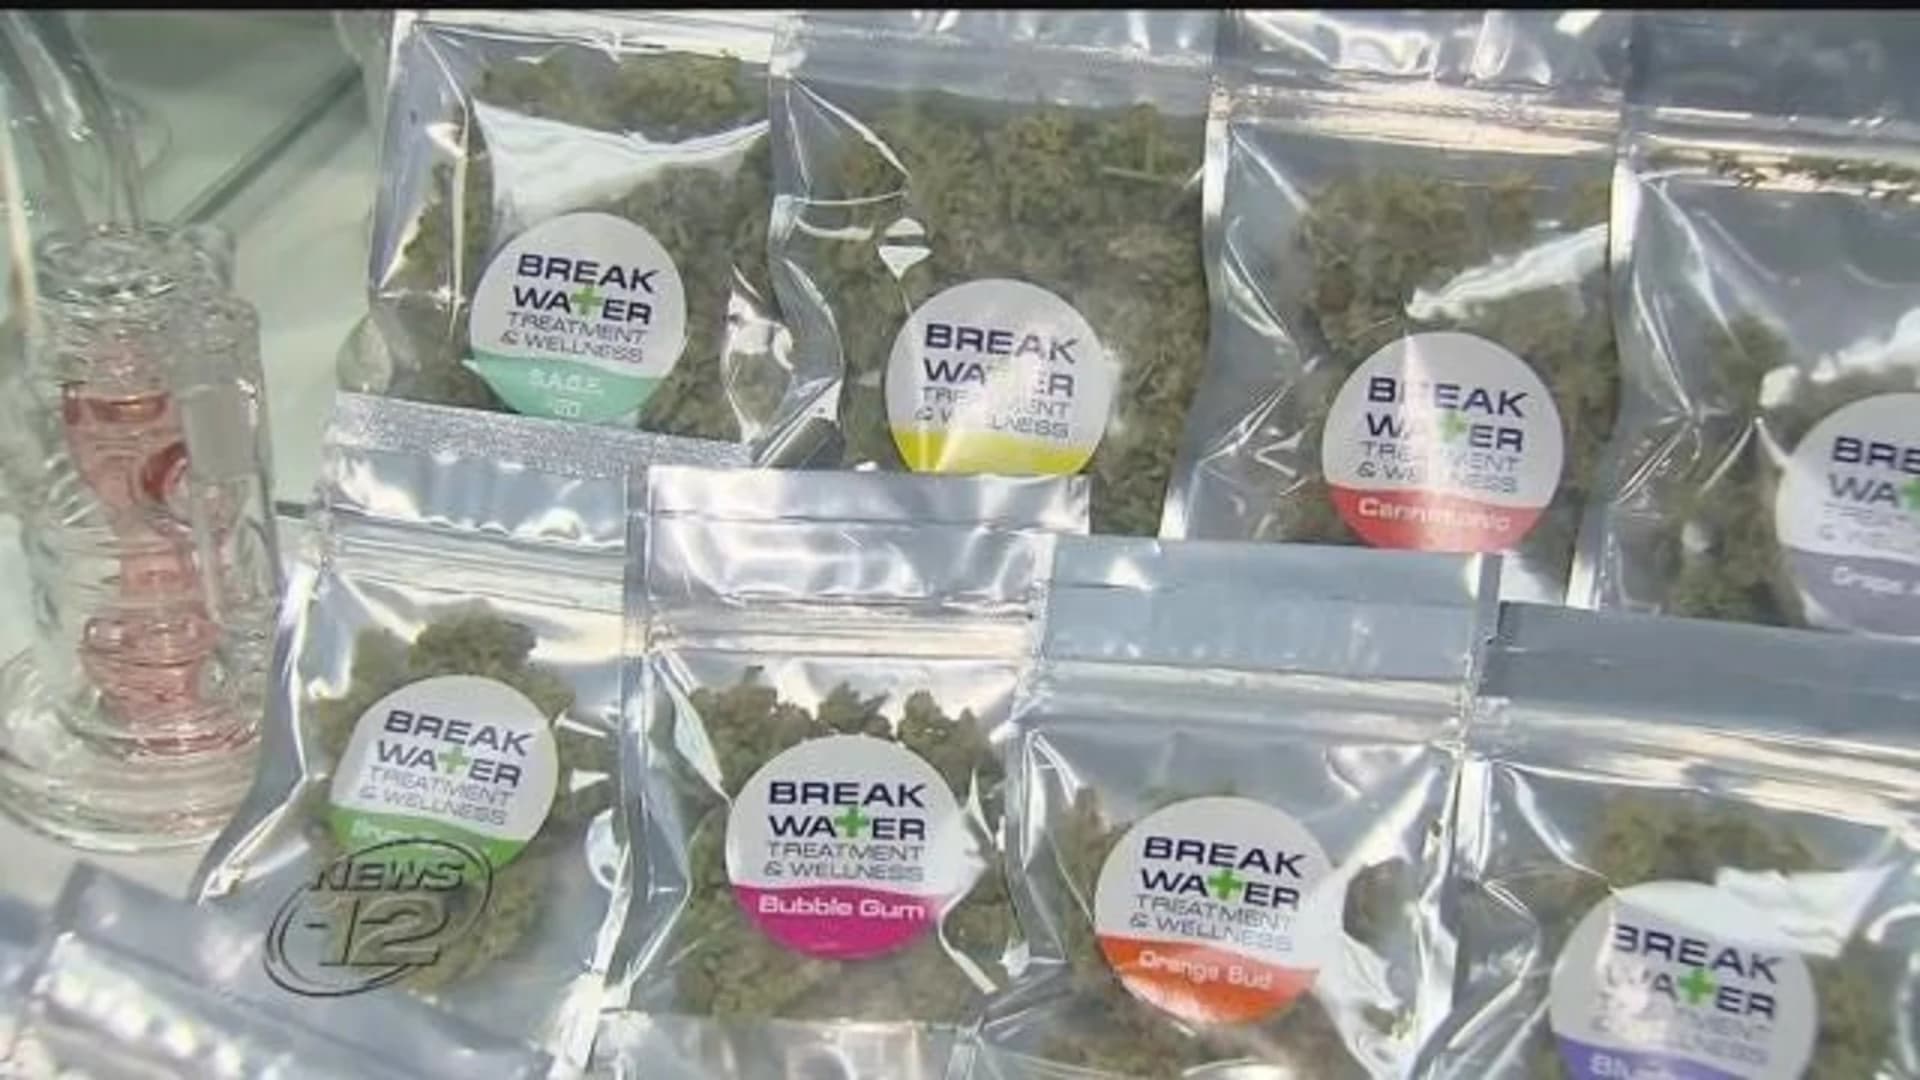 NJ will need at least 50 medical marijuana dispensaries to keep up with demand